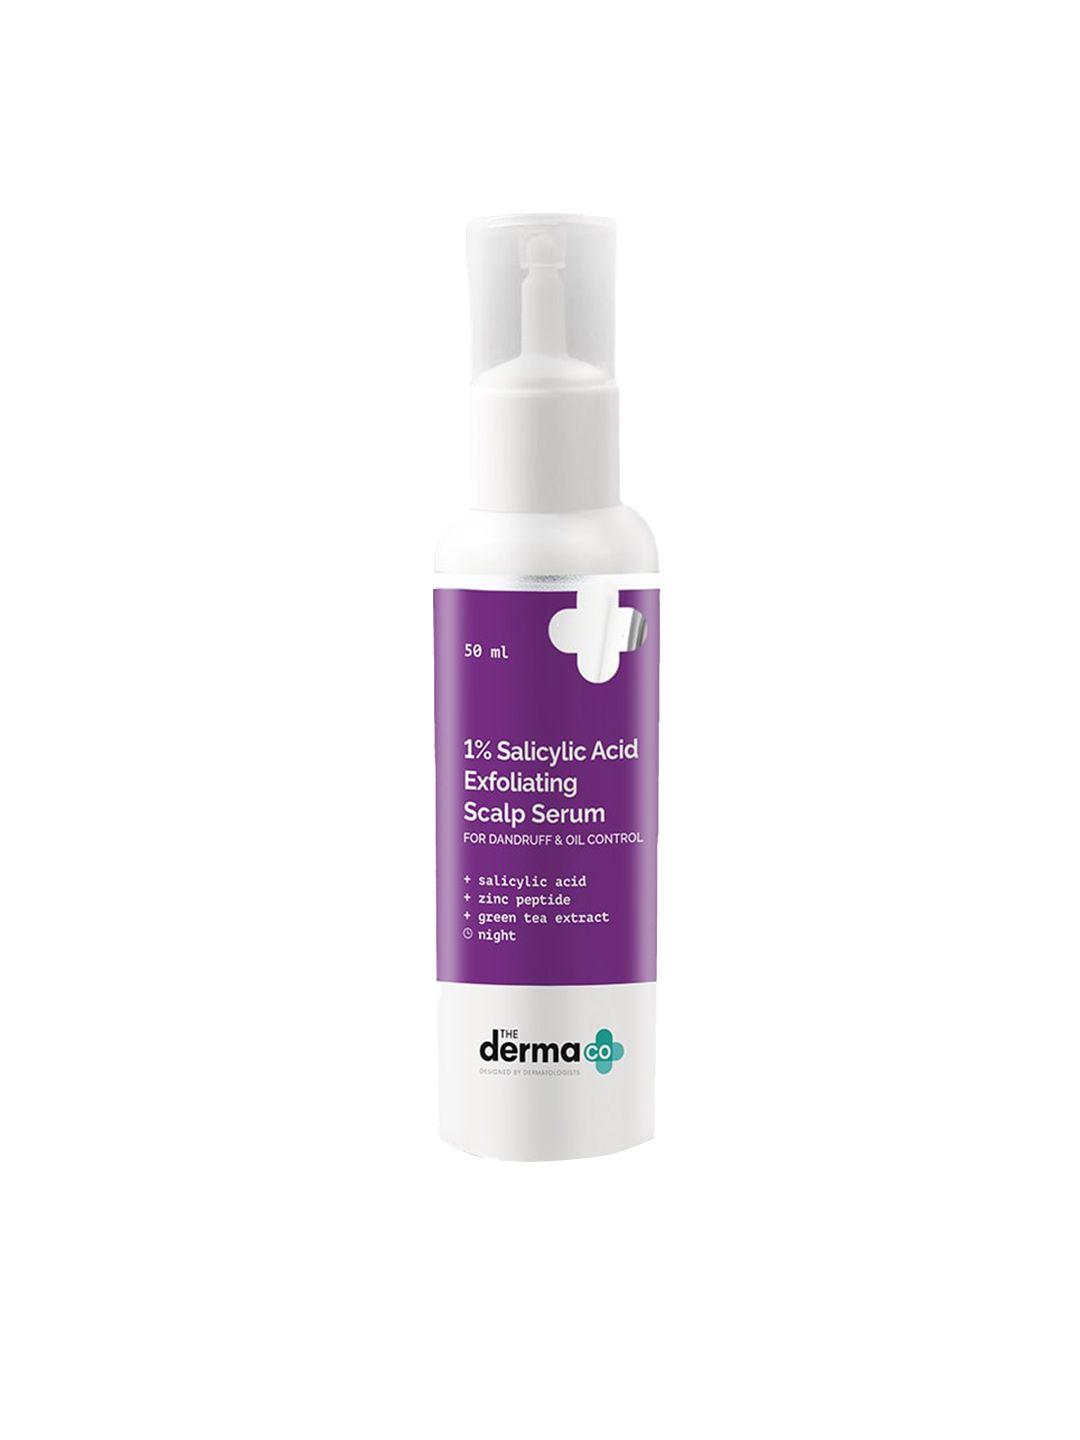 the derma co. 1% salicylic acid exfoliating scalp serum for dandruff & oil control - 50 ml